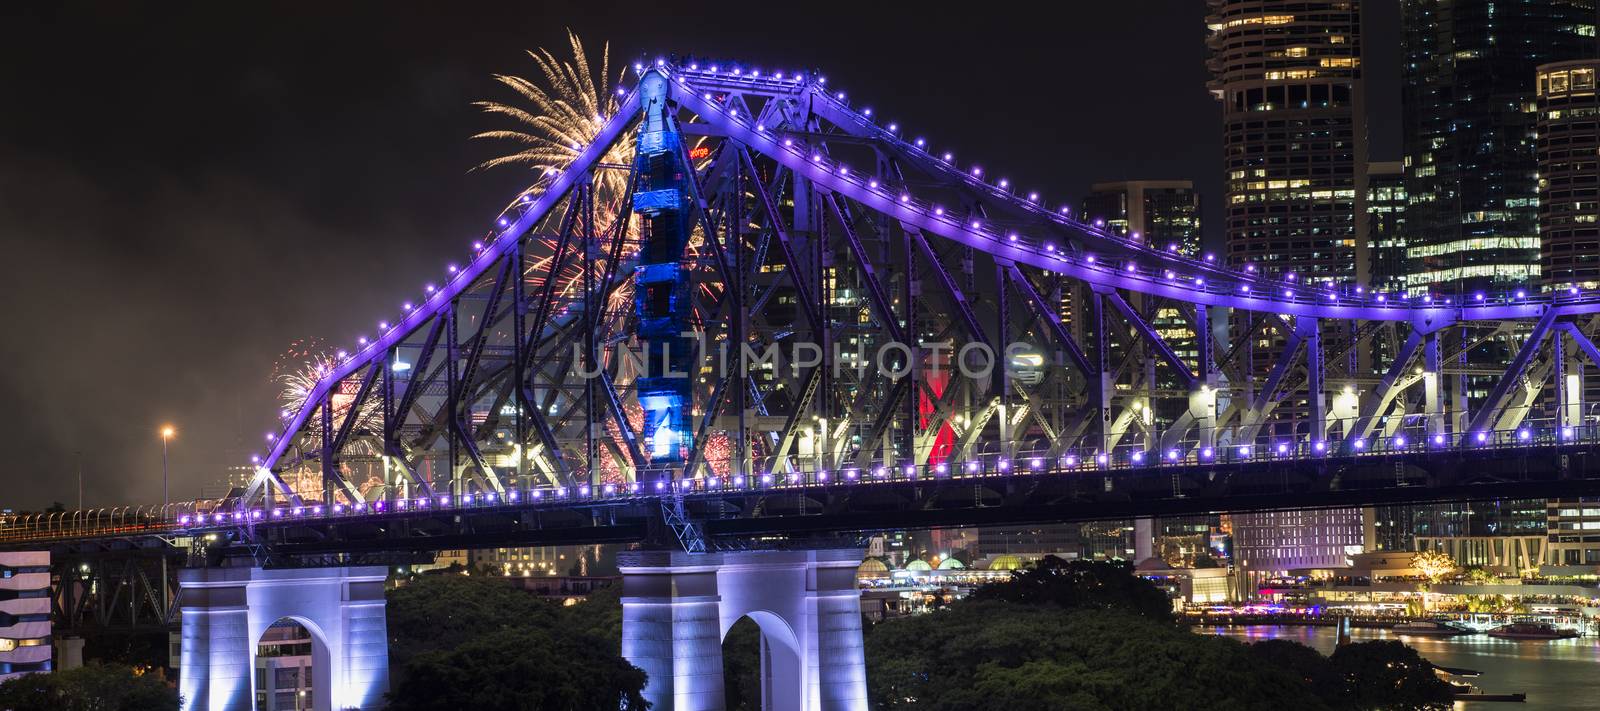 Story Bridge on New Years Eve 2016 in Brisbane by artistrobd